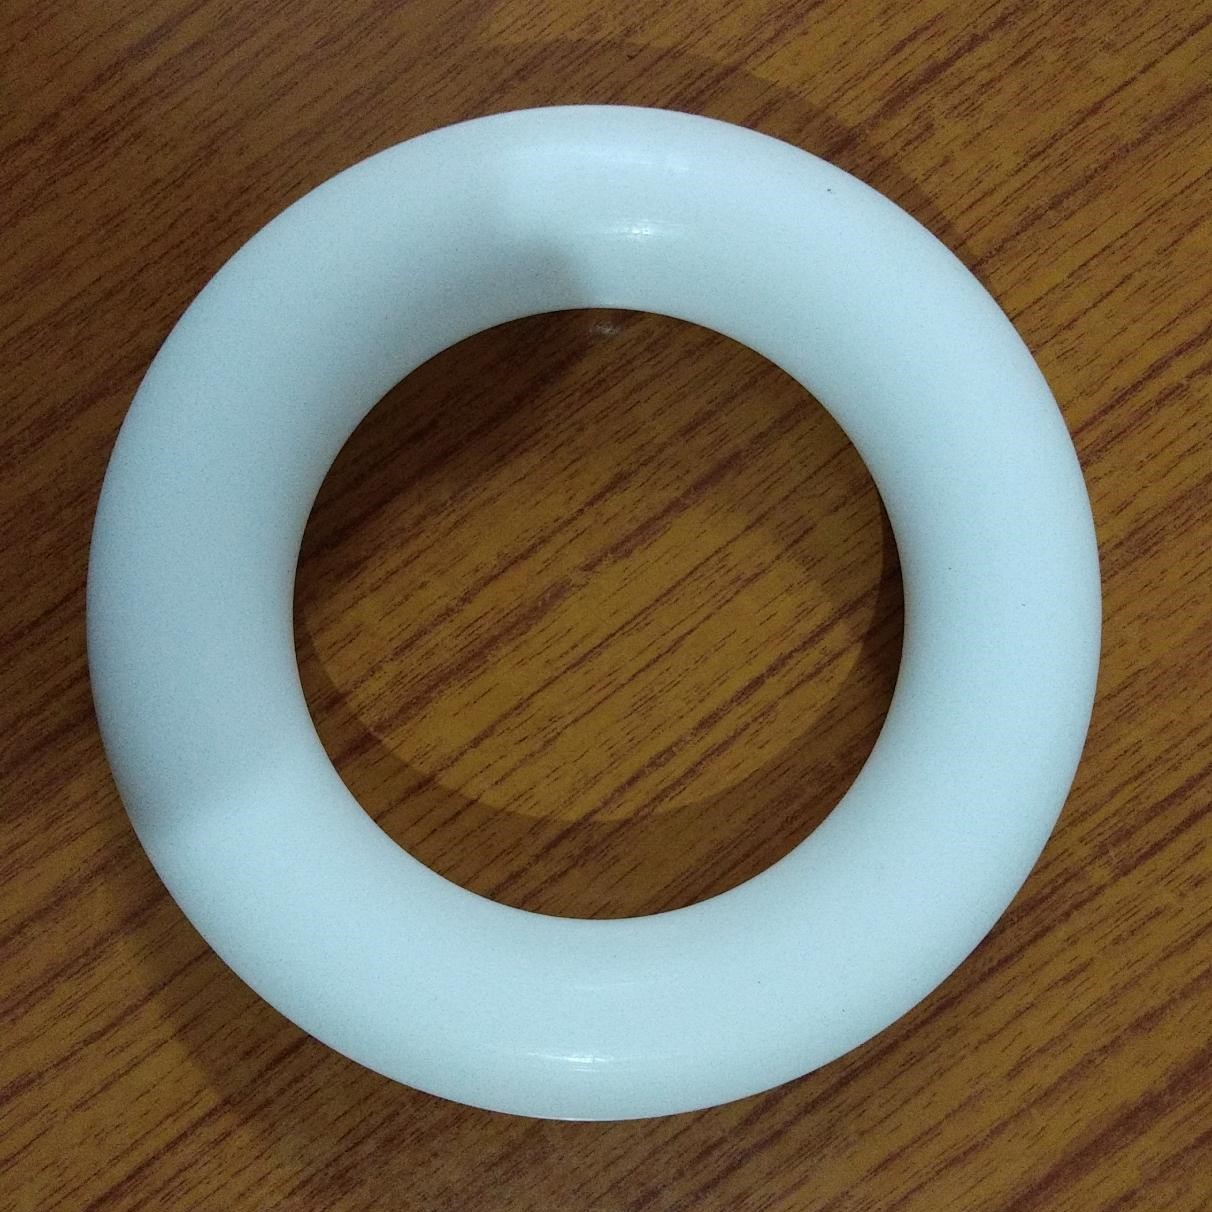 Metric PTFE White O-rings 10 x 2.5mm Price for 1 pc - OringsandMore